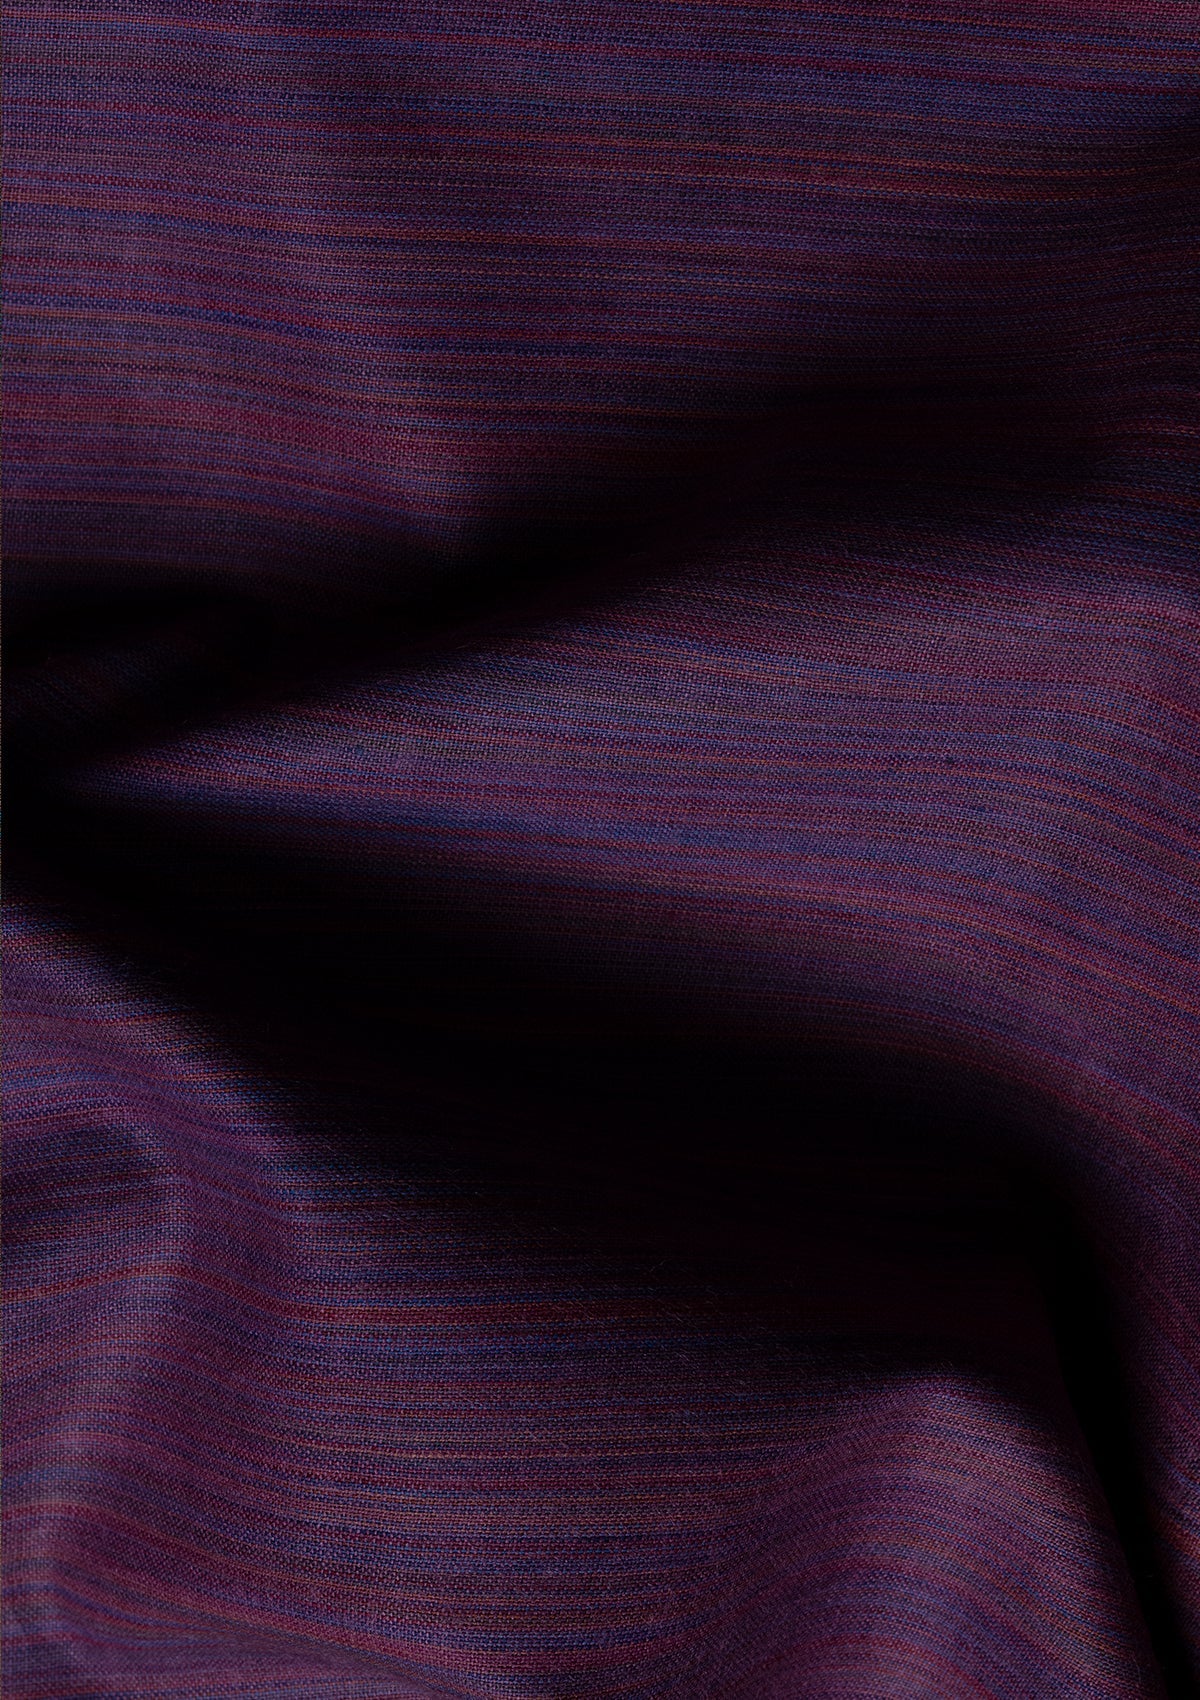 Handwoven Violet Vegetable Silk Fabric